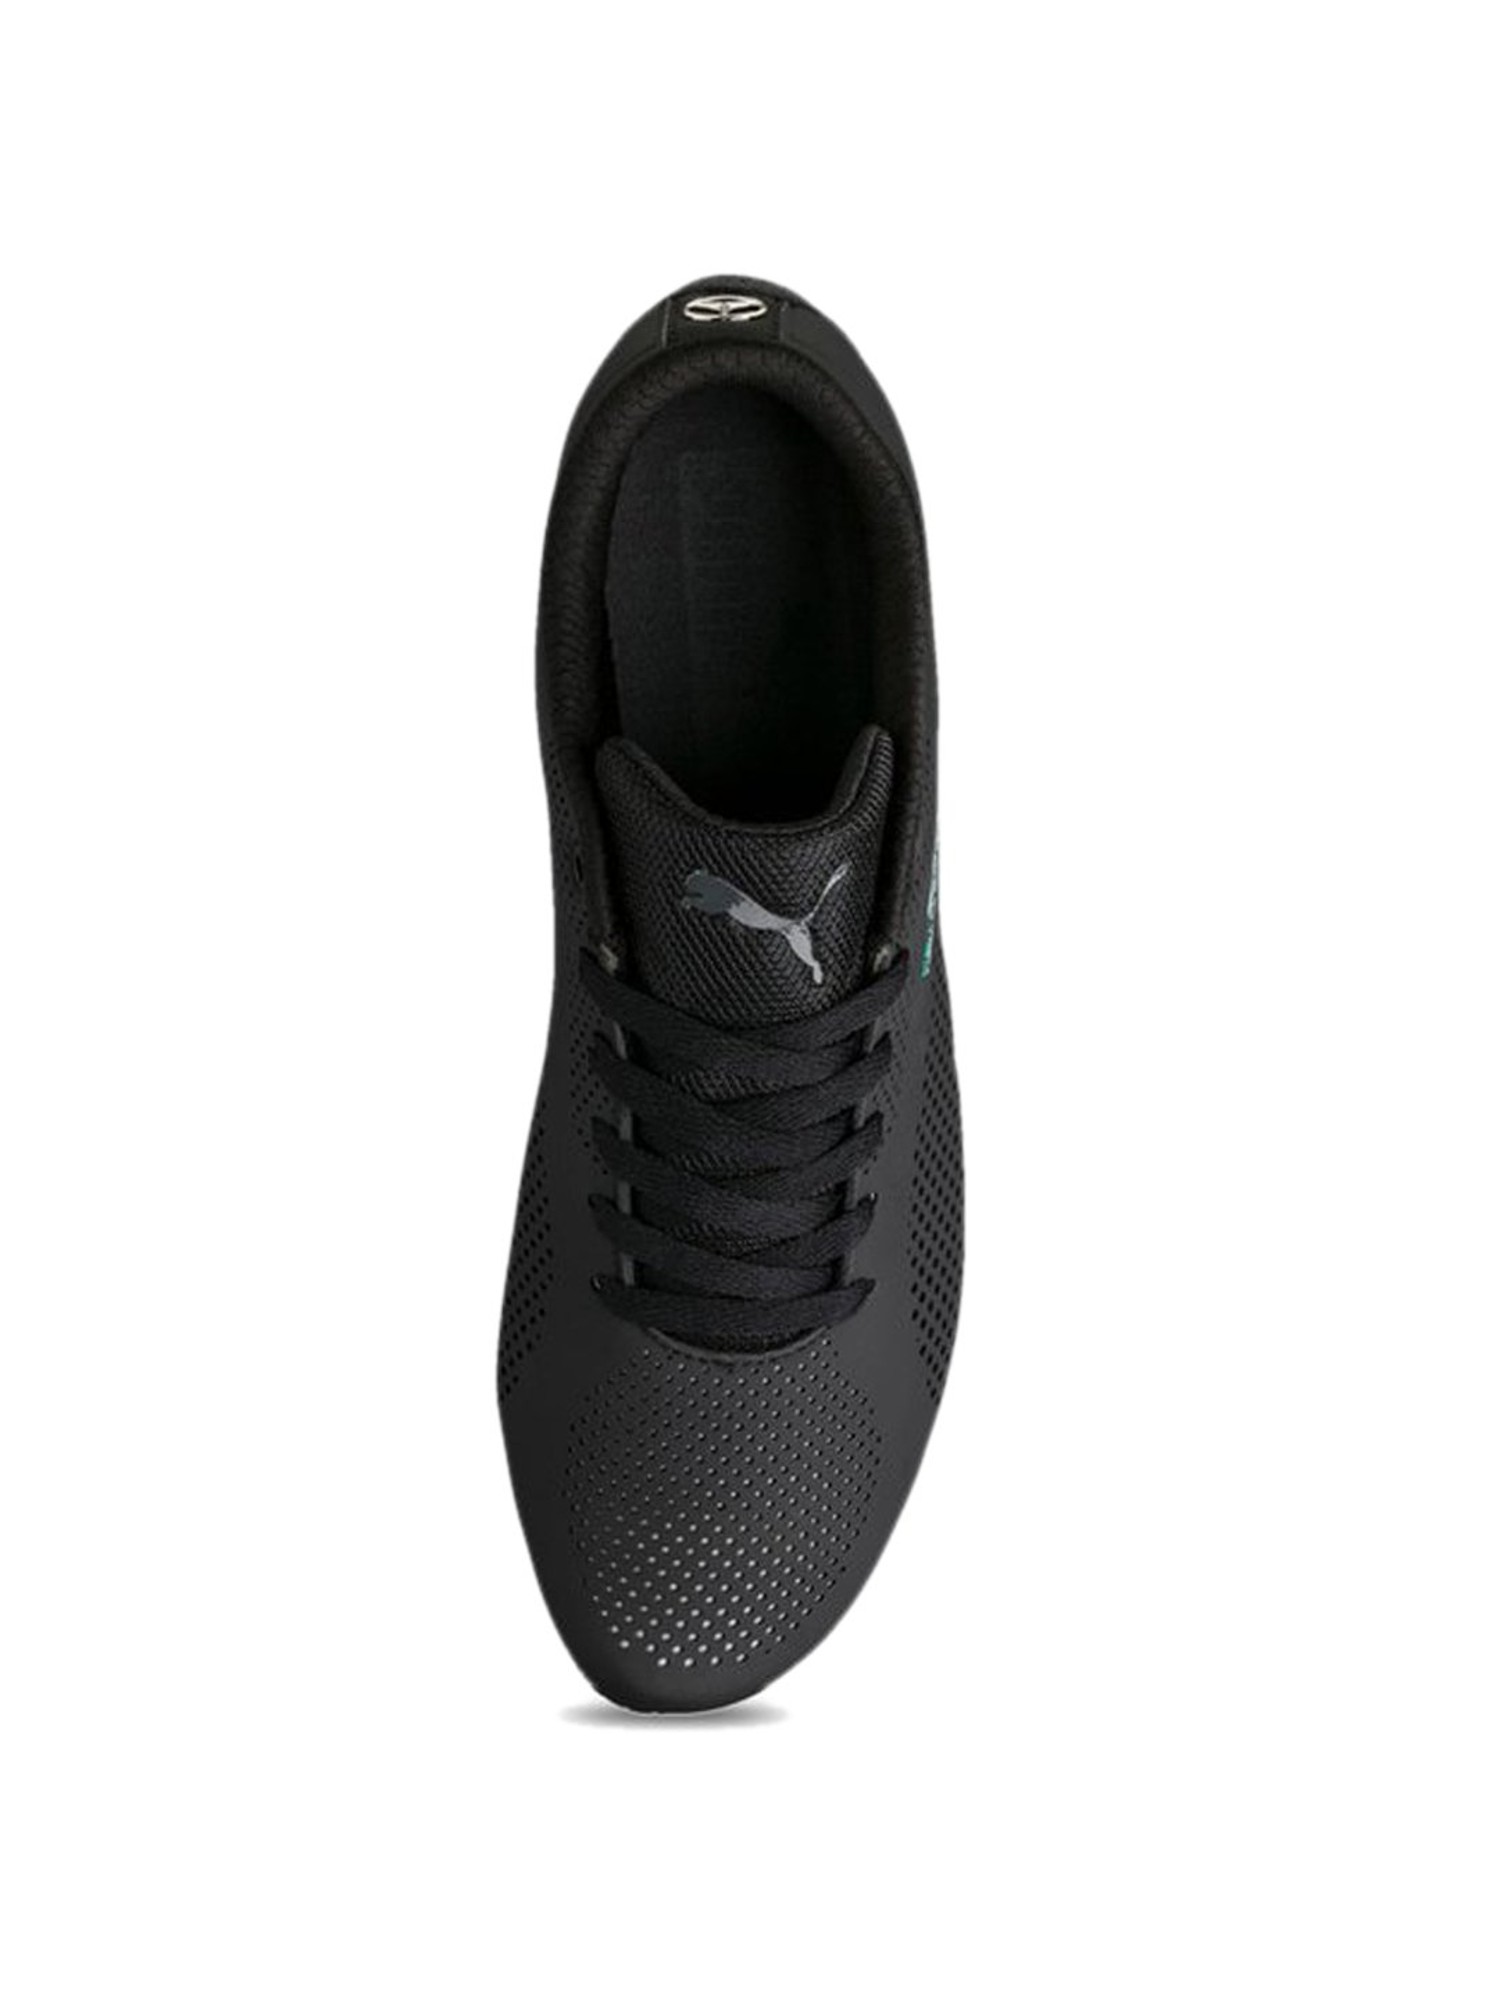 puma mercedes mamgp drift cat ultra black sneakers